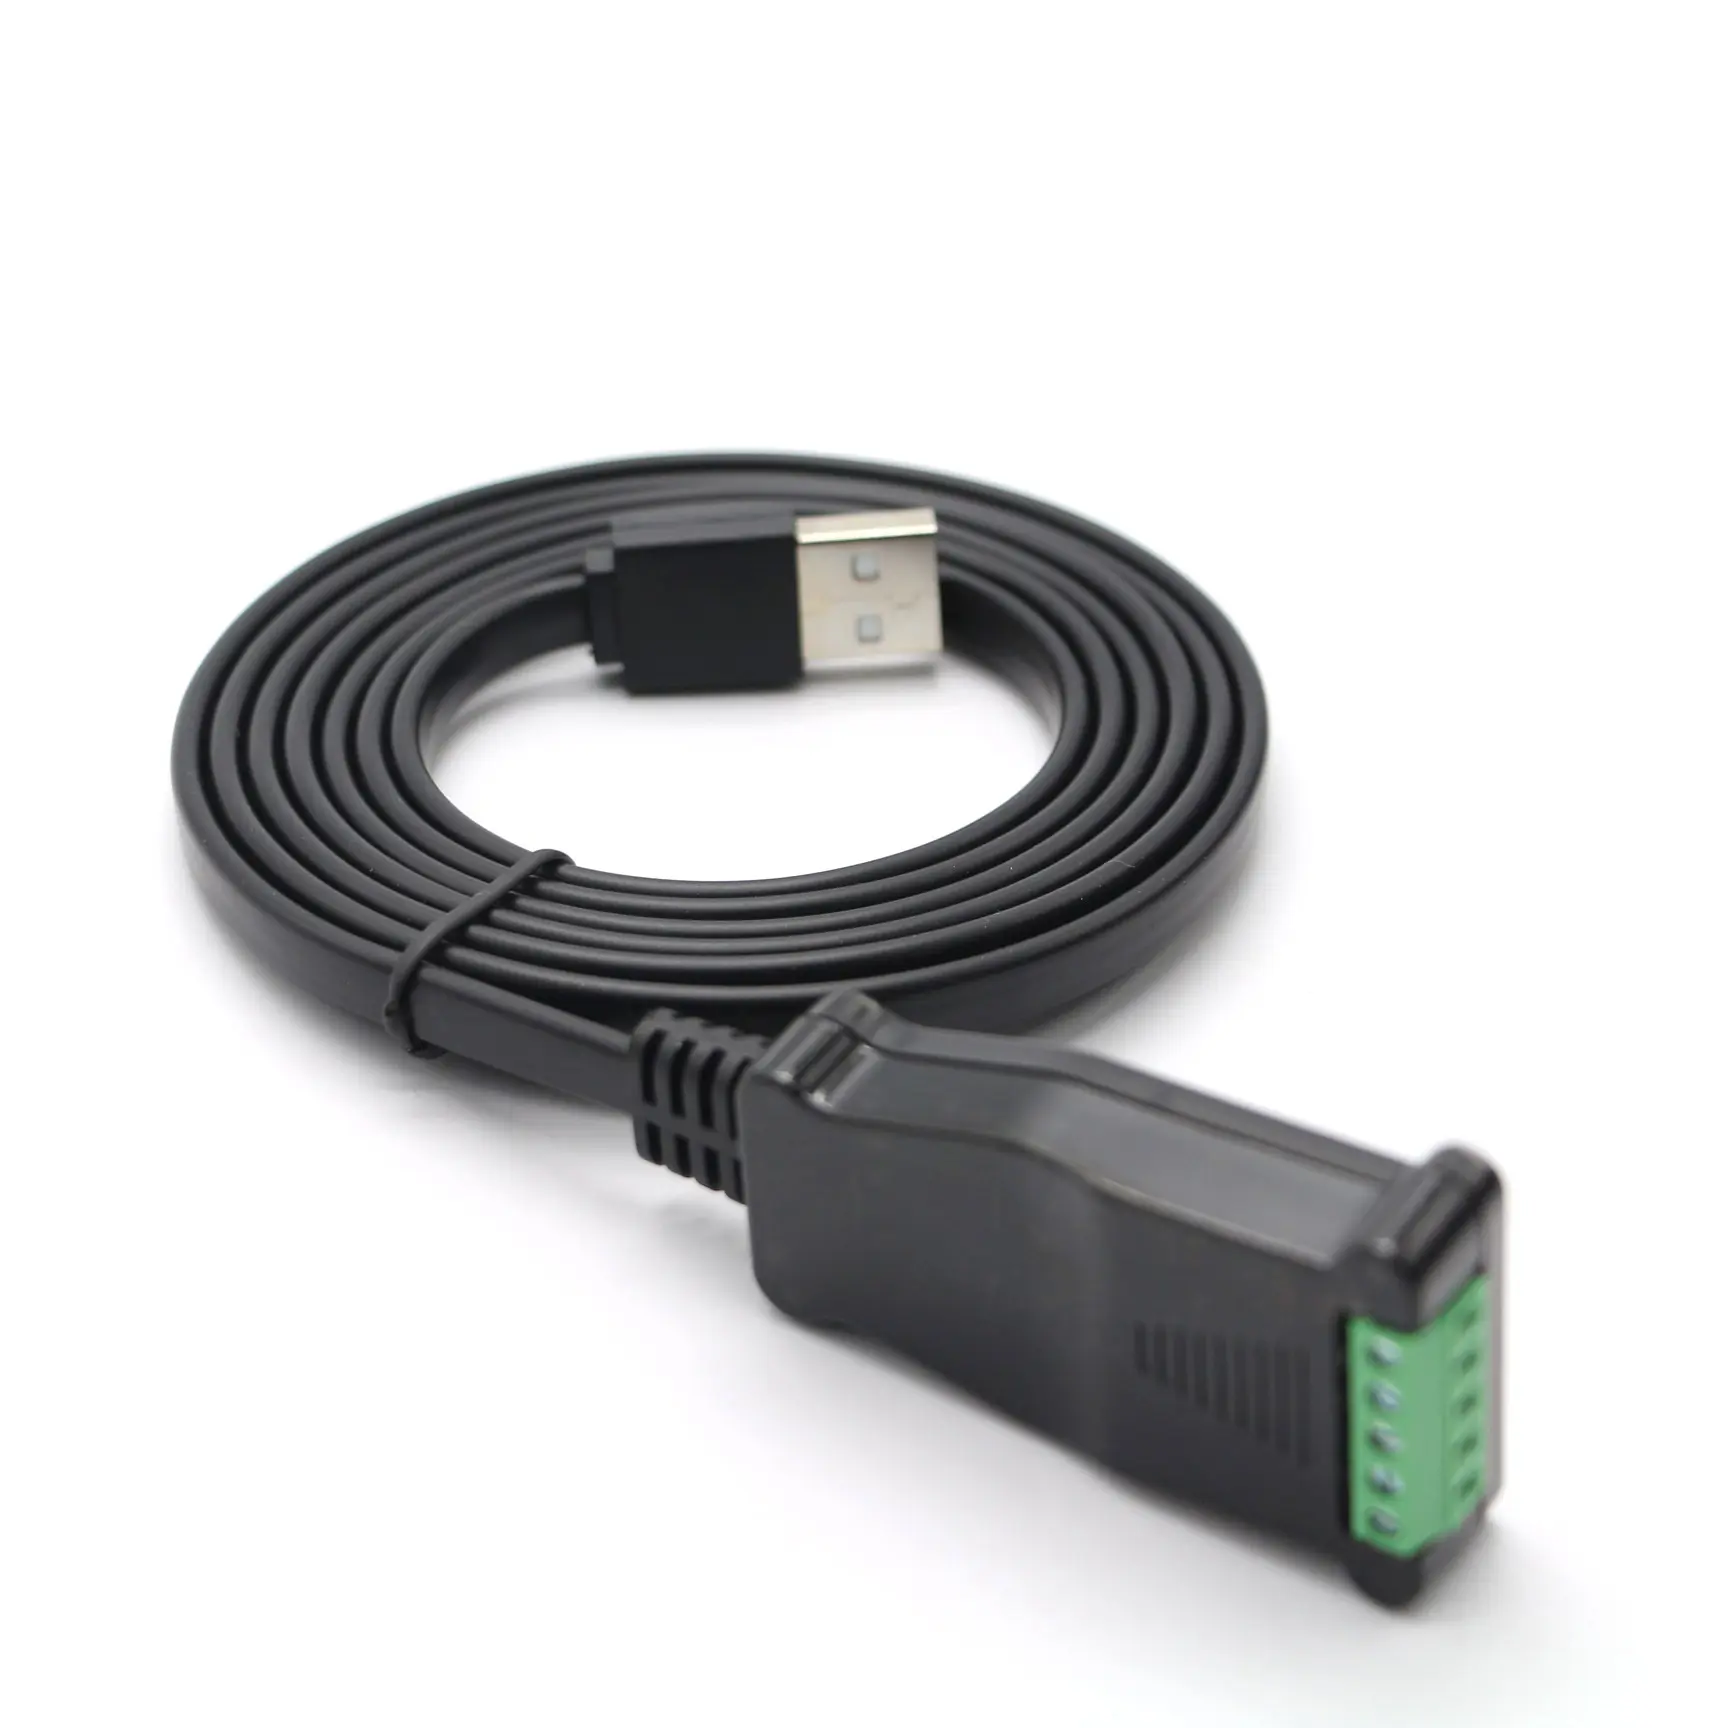 USB RS232 RS422 RS485 tam çift yönlü seri Port dönüştürücü adaptör kablosu desteği Win98 2000 XP Win7 Win10 Vista